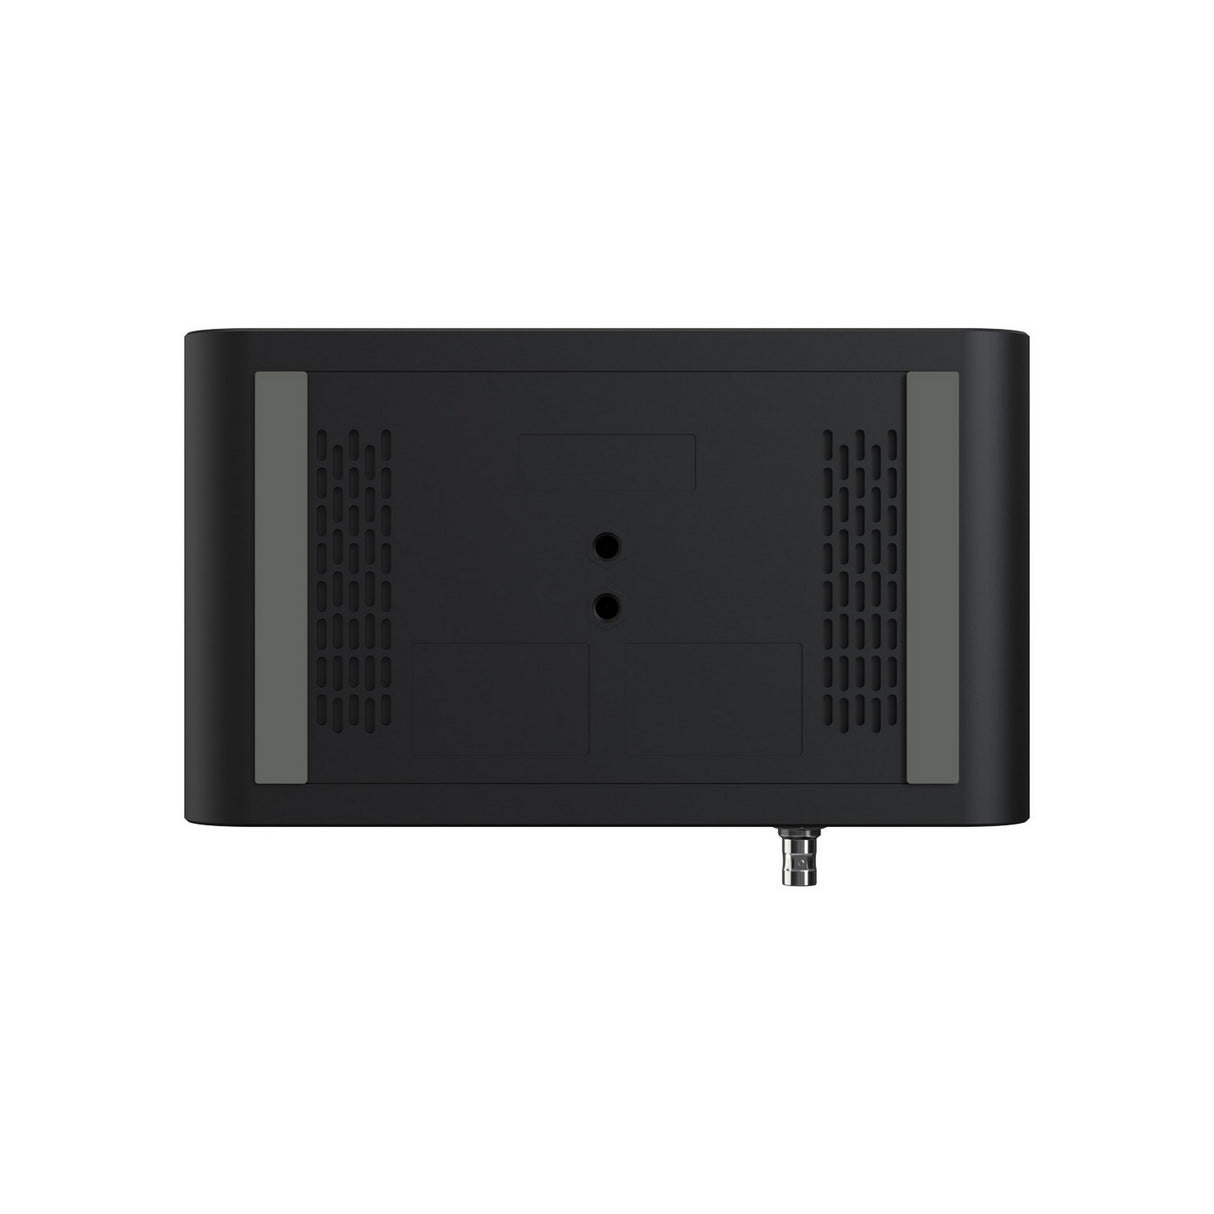 BZBGEAR ADAMO 20X 1080P FHD Auto Tracking HDMI/3G-SDI/USB 2.0/USB 3.0/NDI|HX Live Streaming PTZ Camera